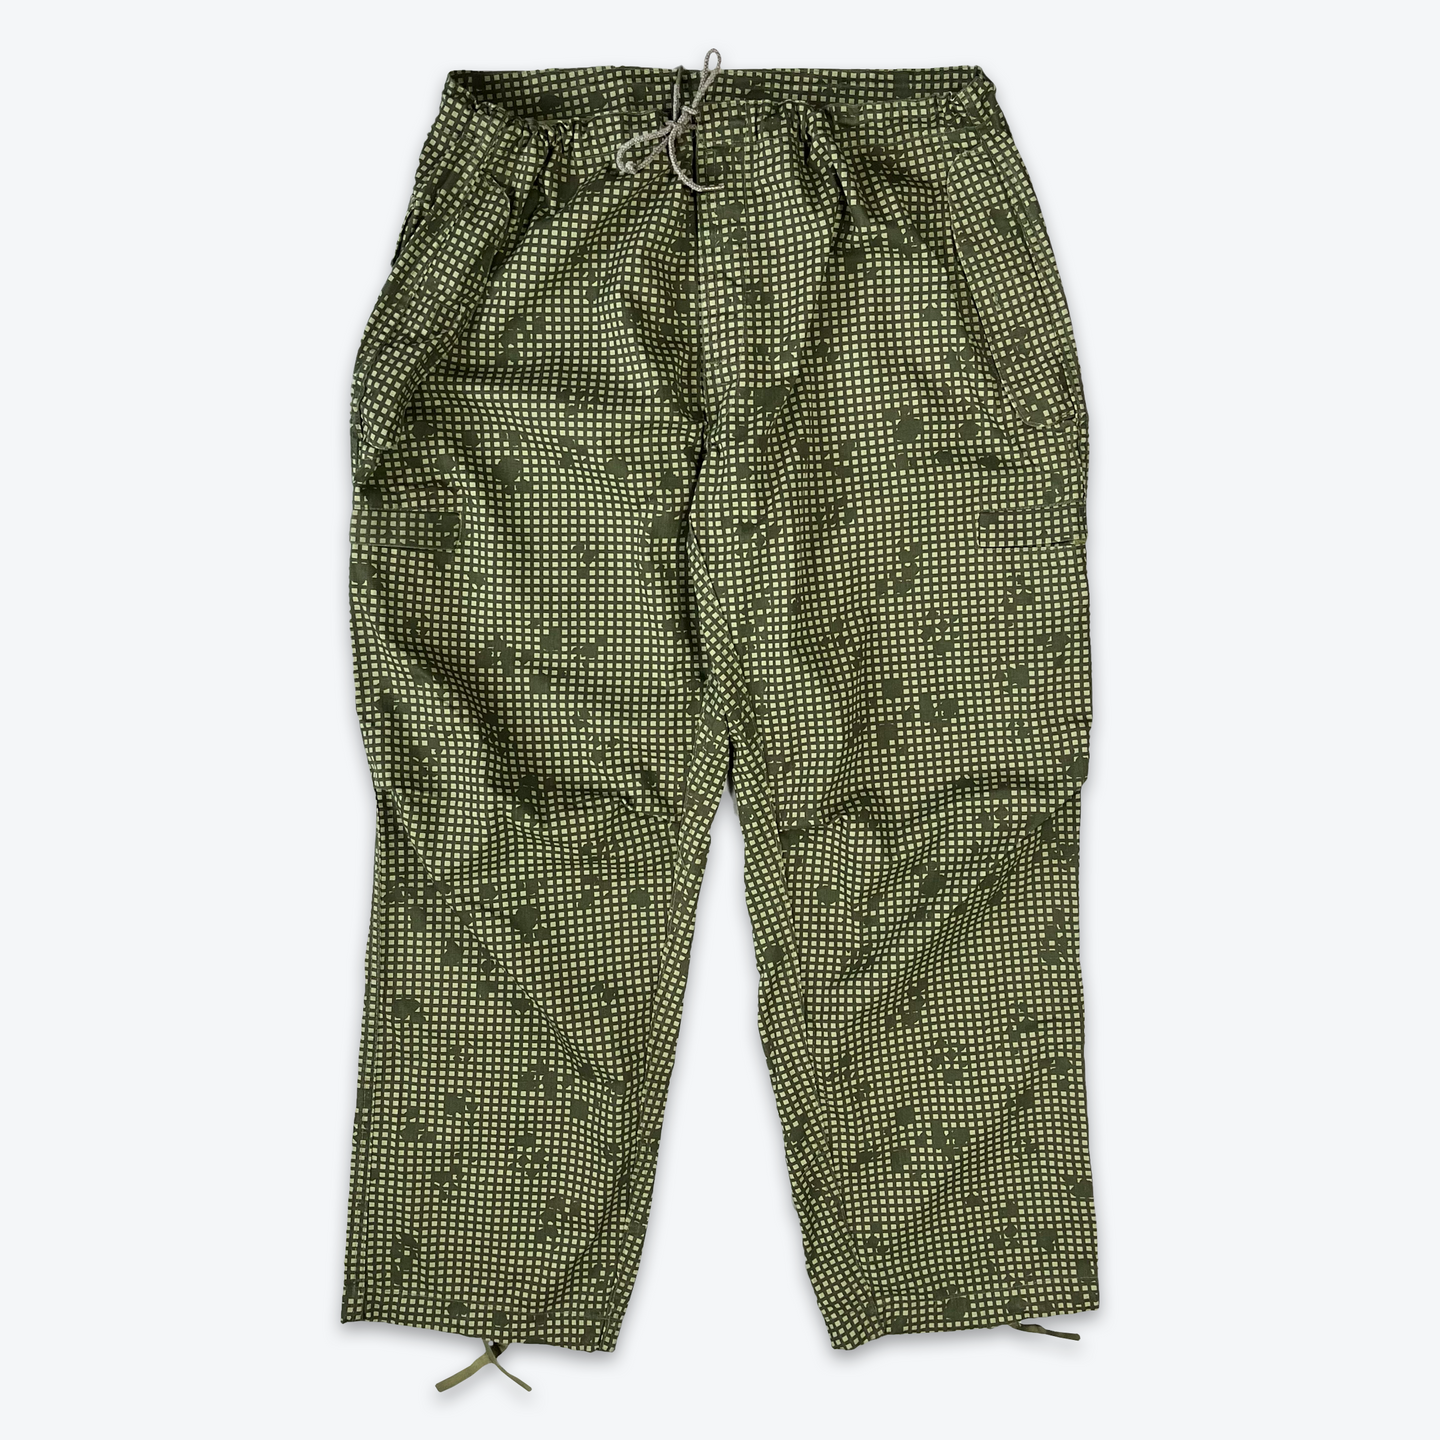 Vintage Military Pants (Digi Night Camo)